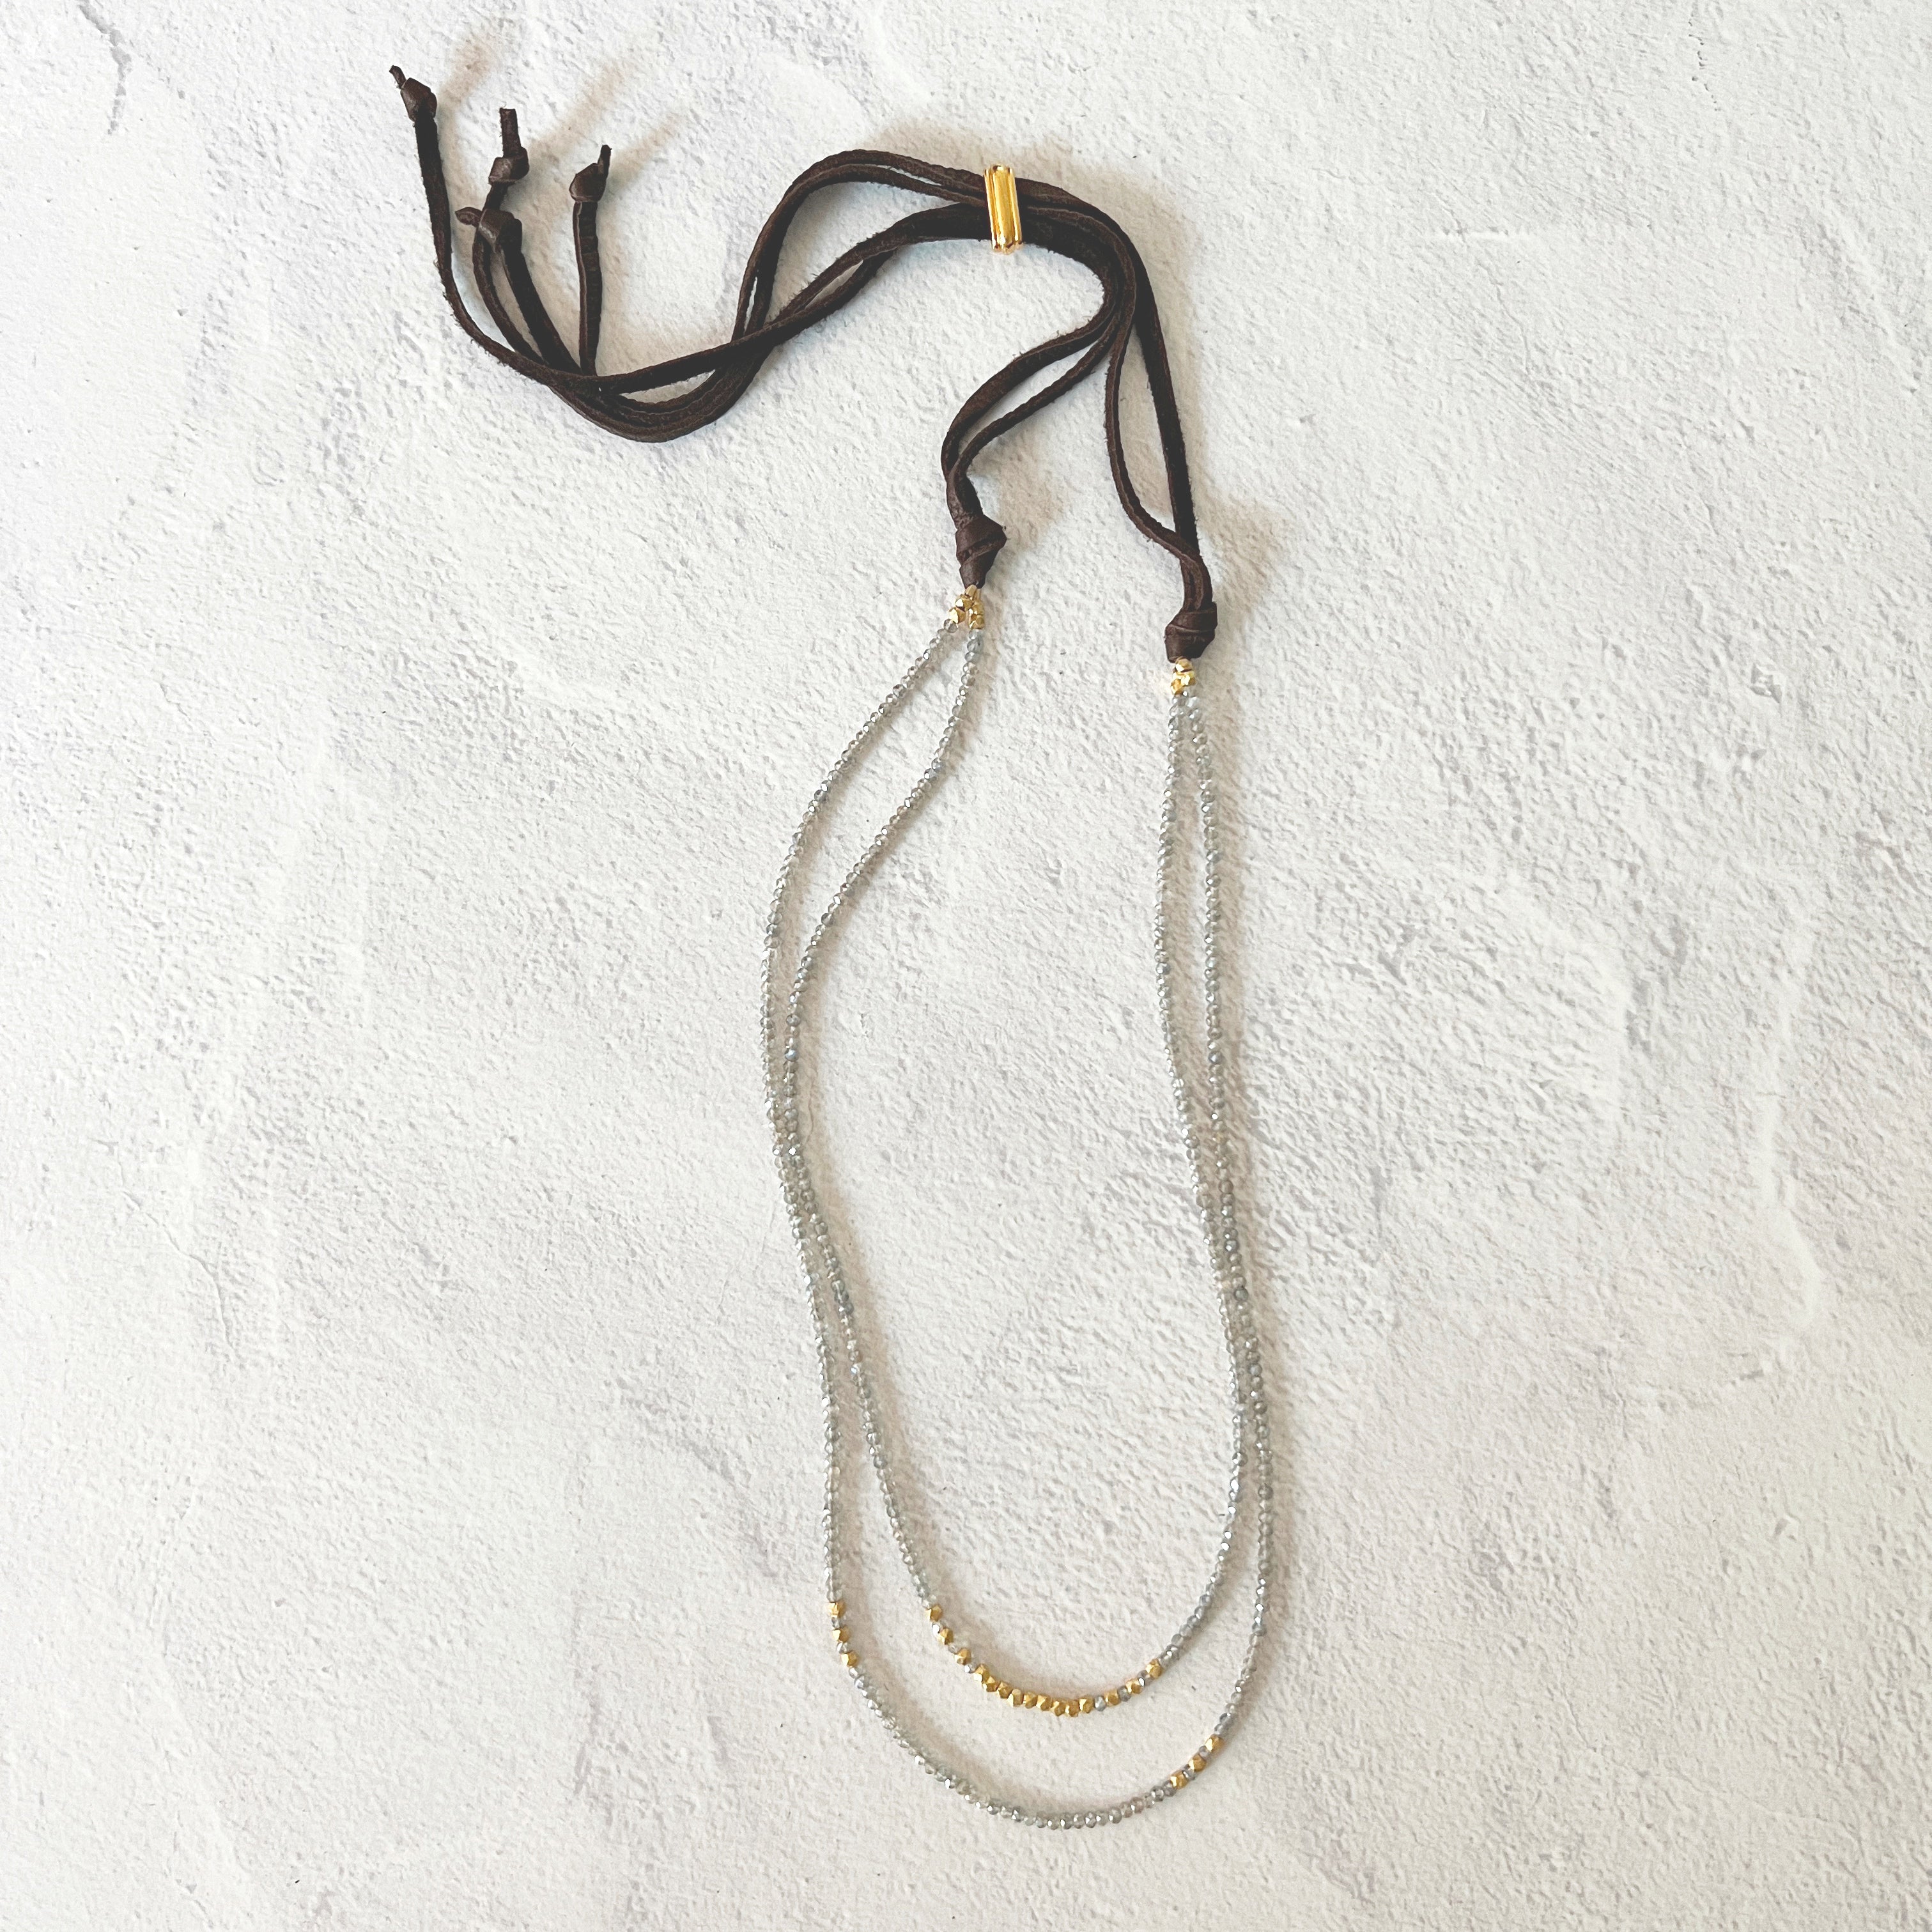 Kortum Necklace with Leather Mystic Labradorite